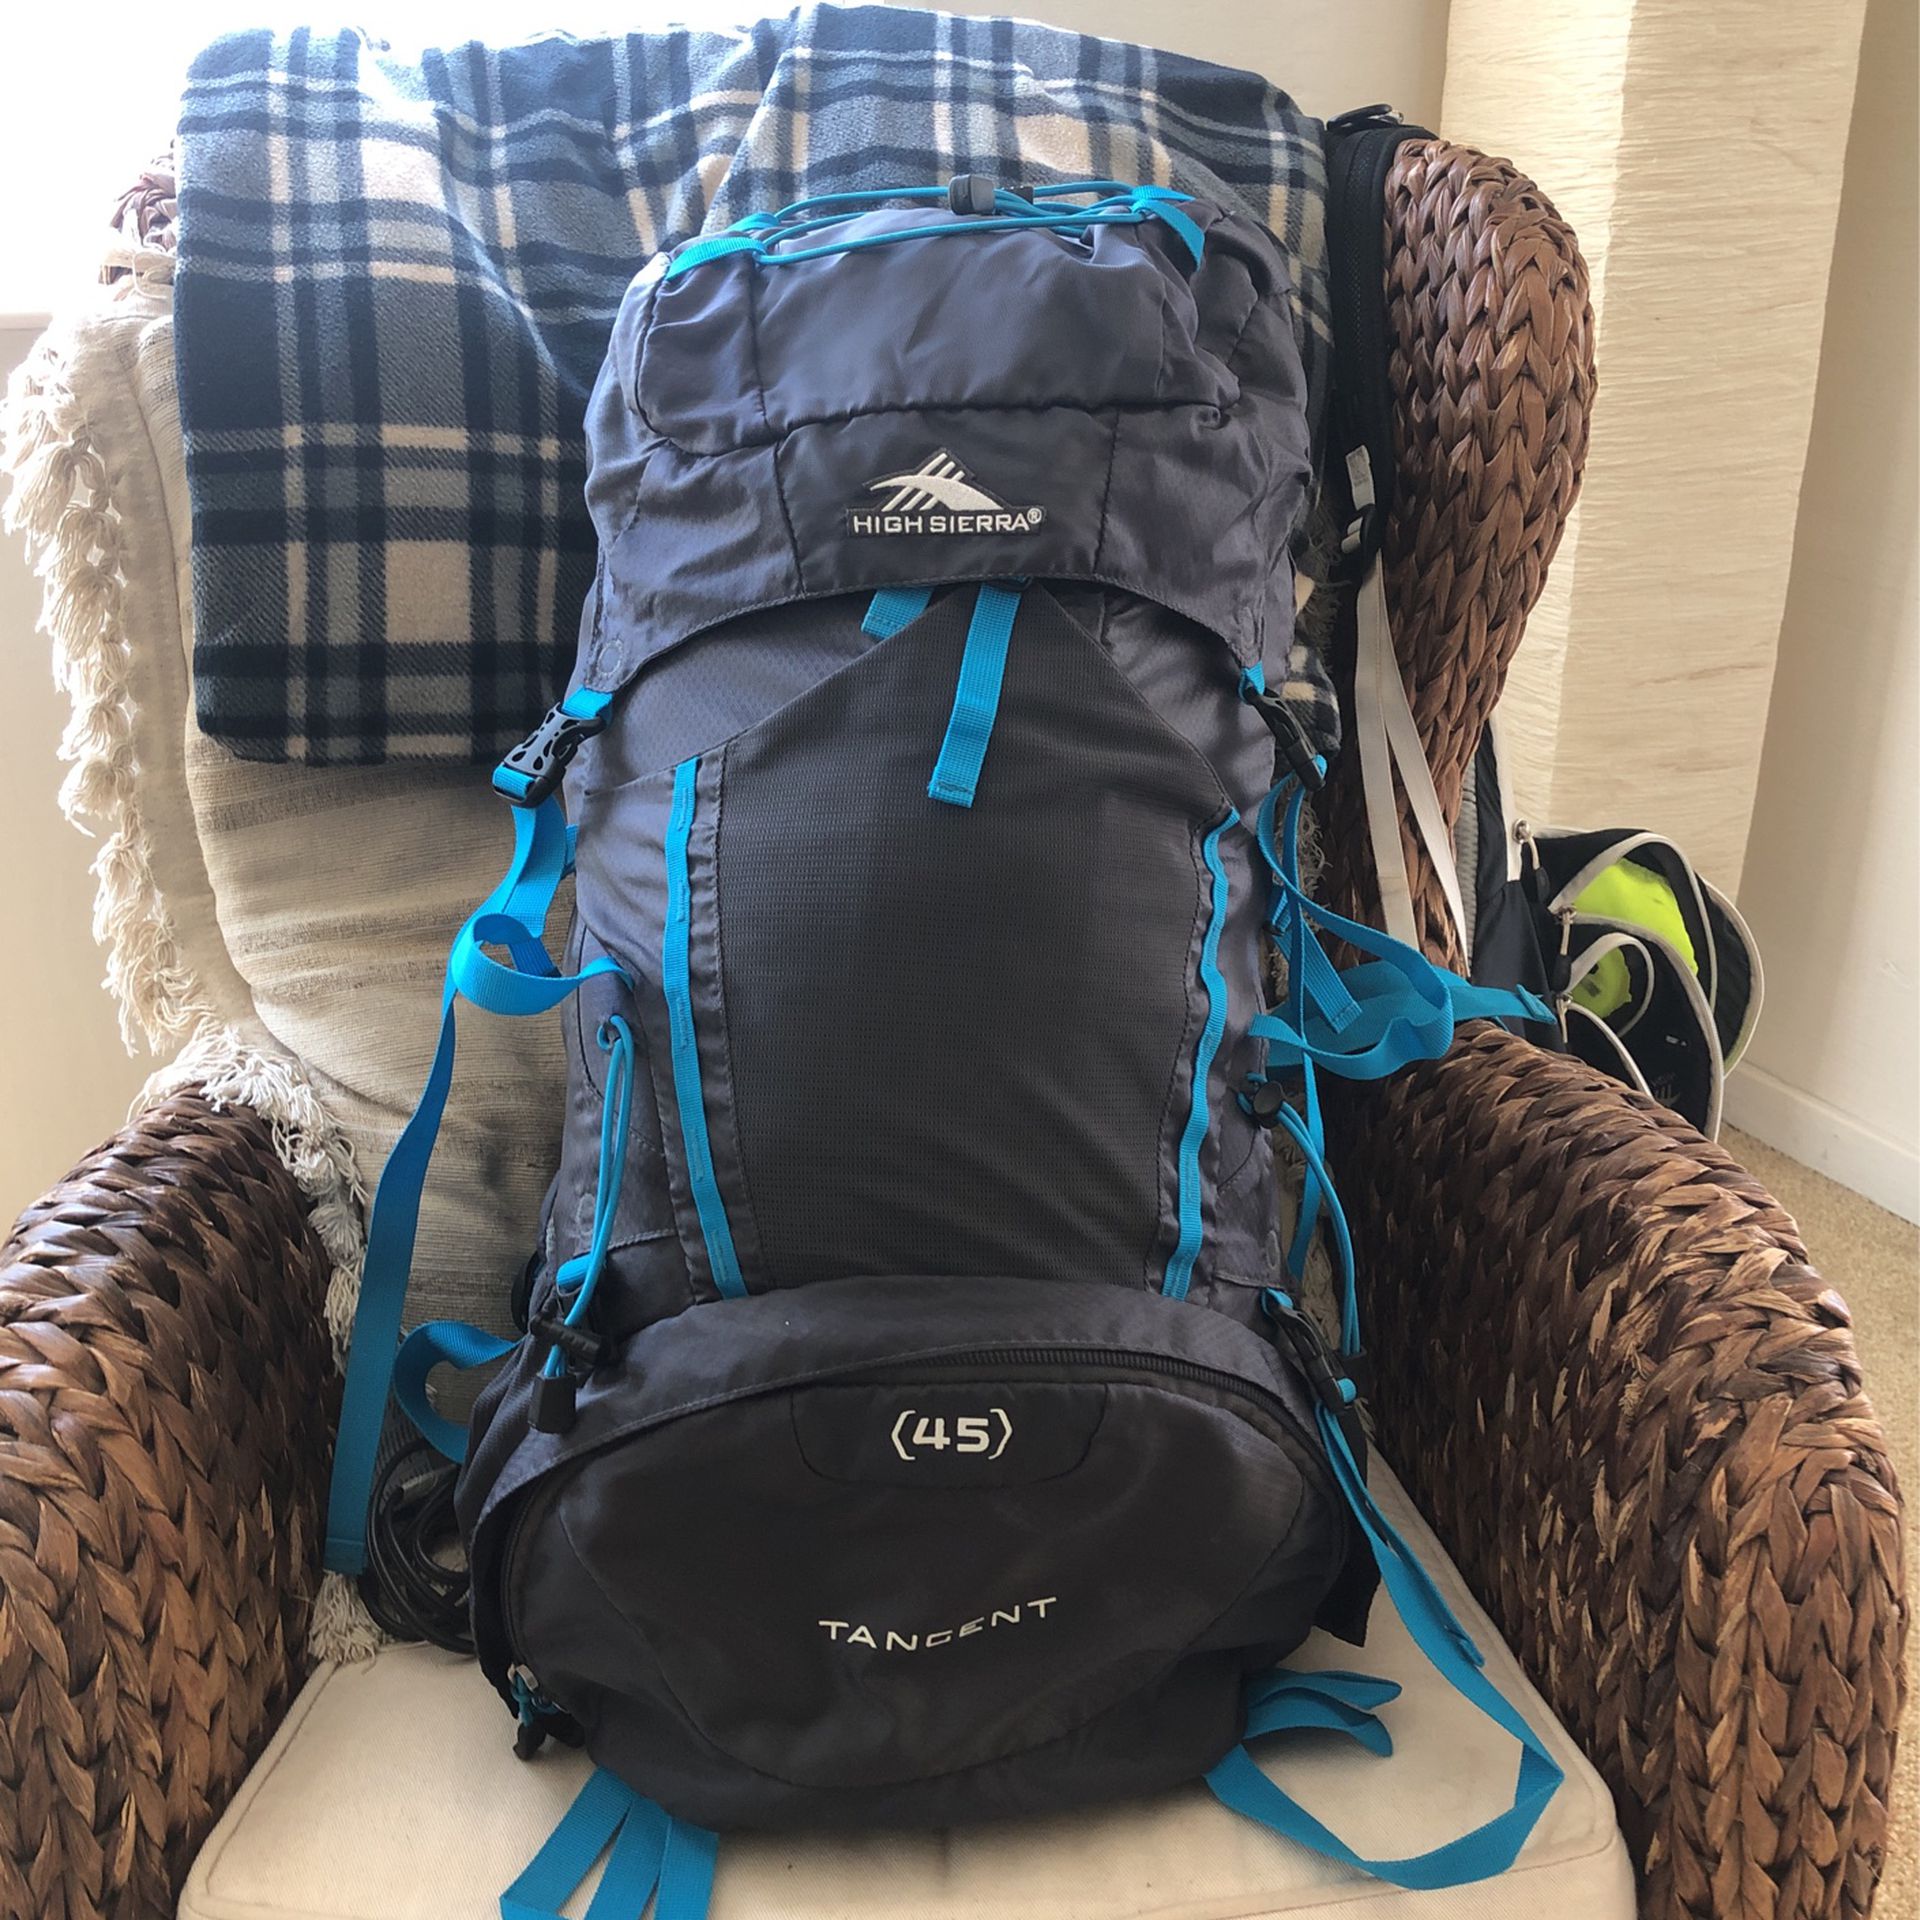 High Sierra Tangent 45L Backpacking Pack